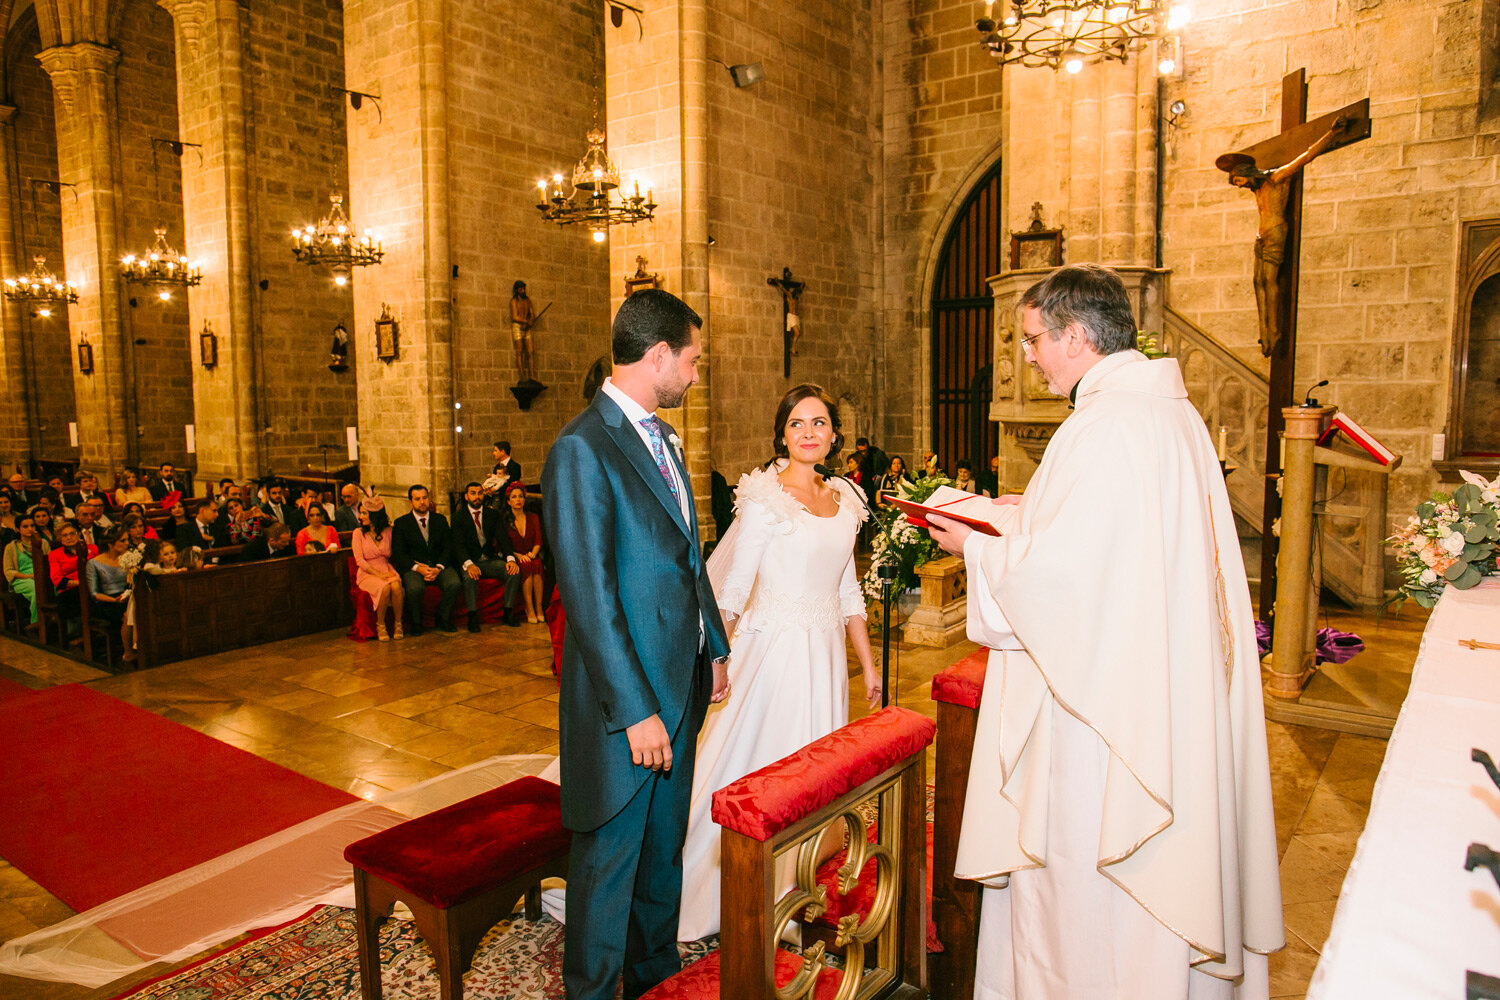 109-vilayvidal-fotografia-bodas-gandia-valencia-alicante-boda-elia-fernando_mas_dalzedo.jpg